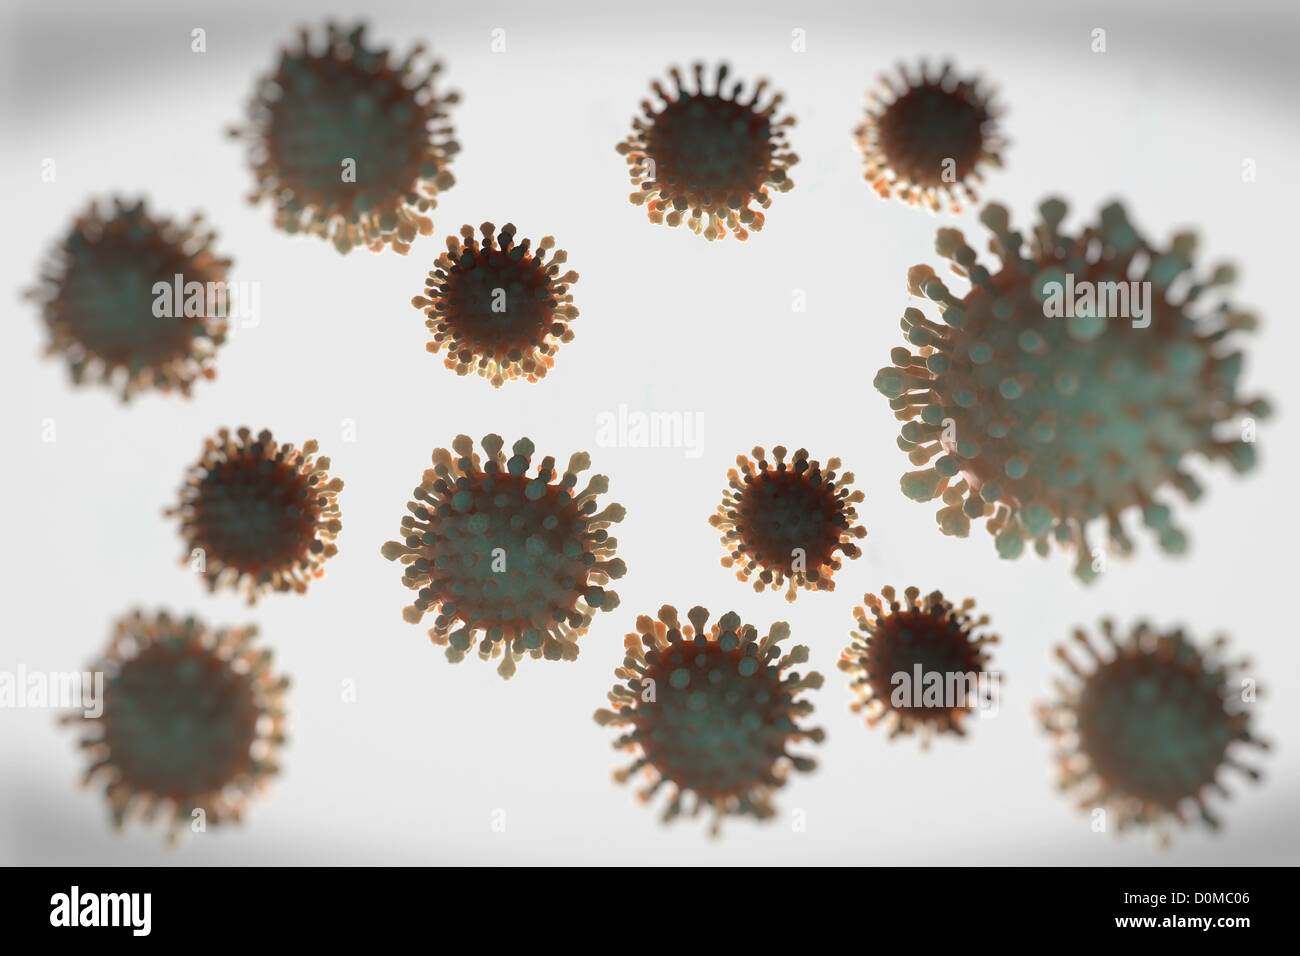 H1N1 influenza virus particles. Stock Photo